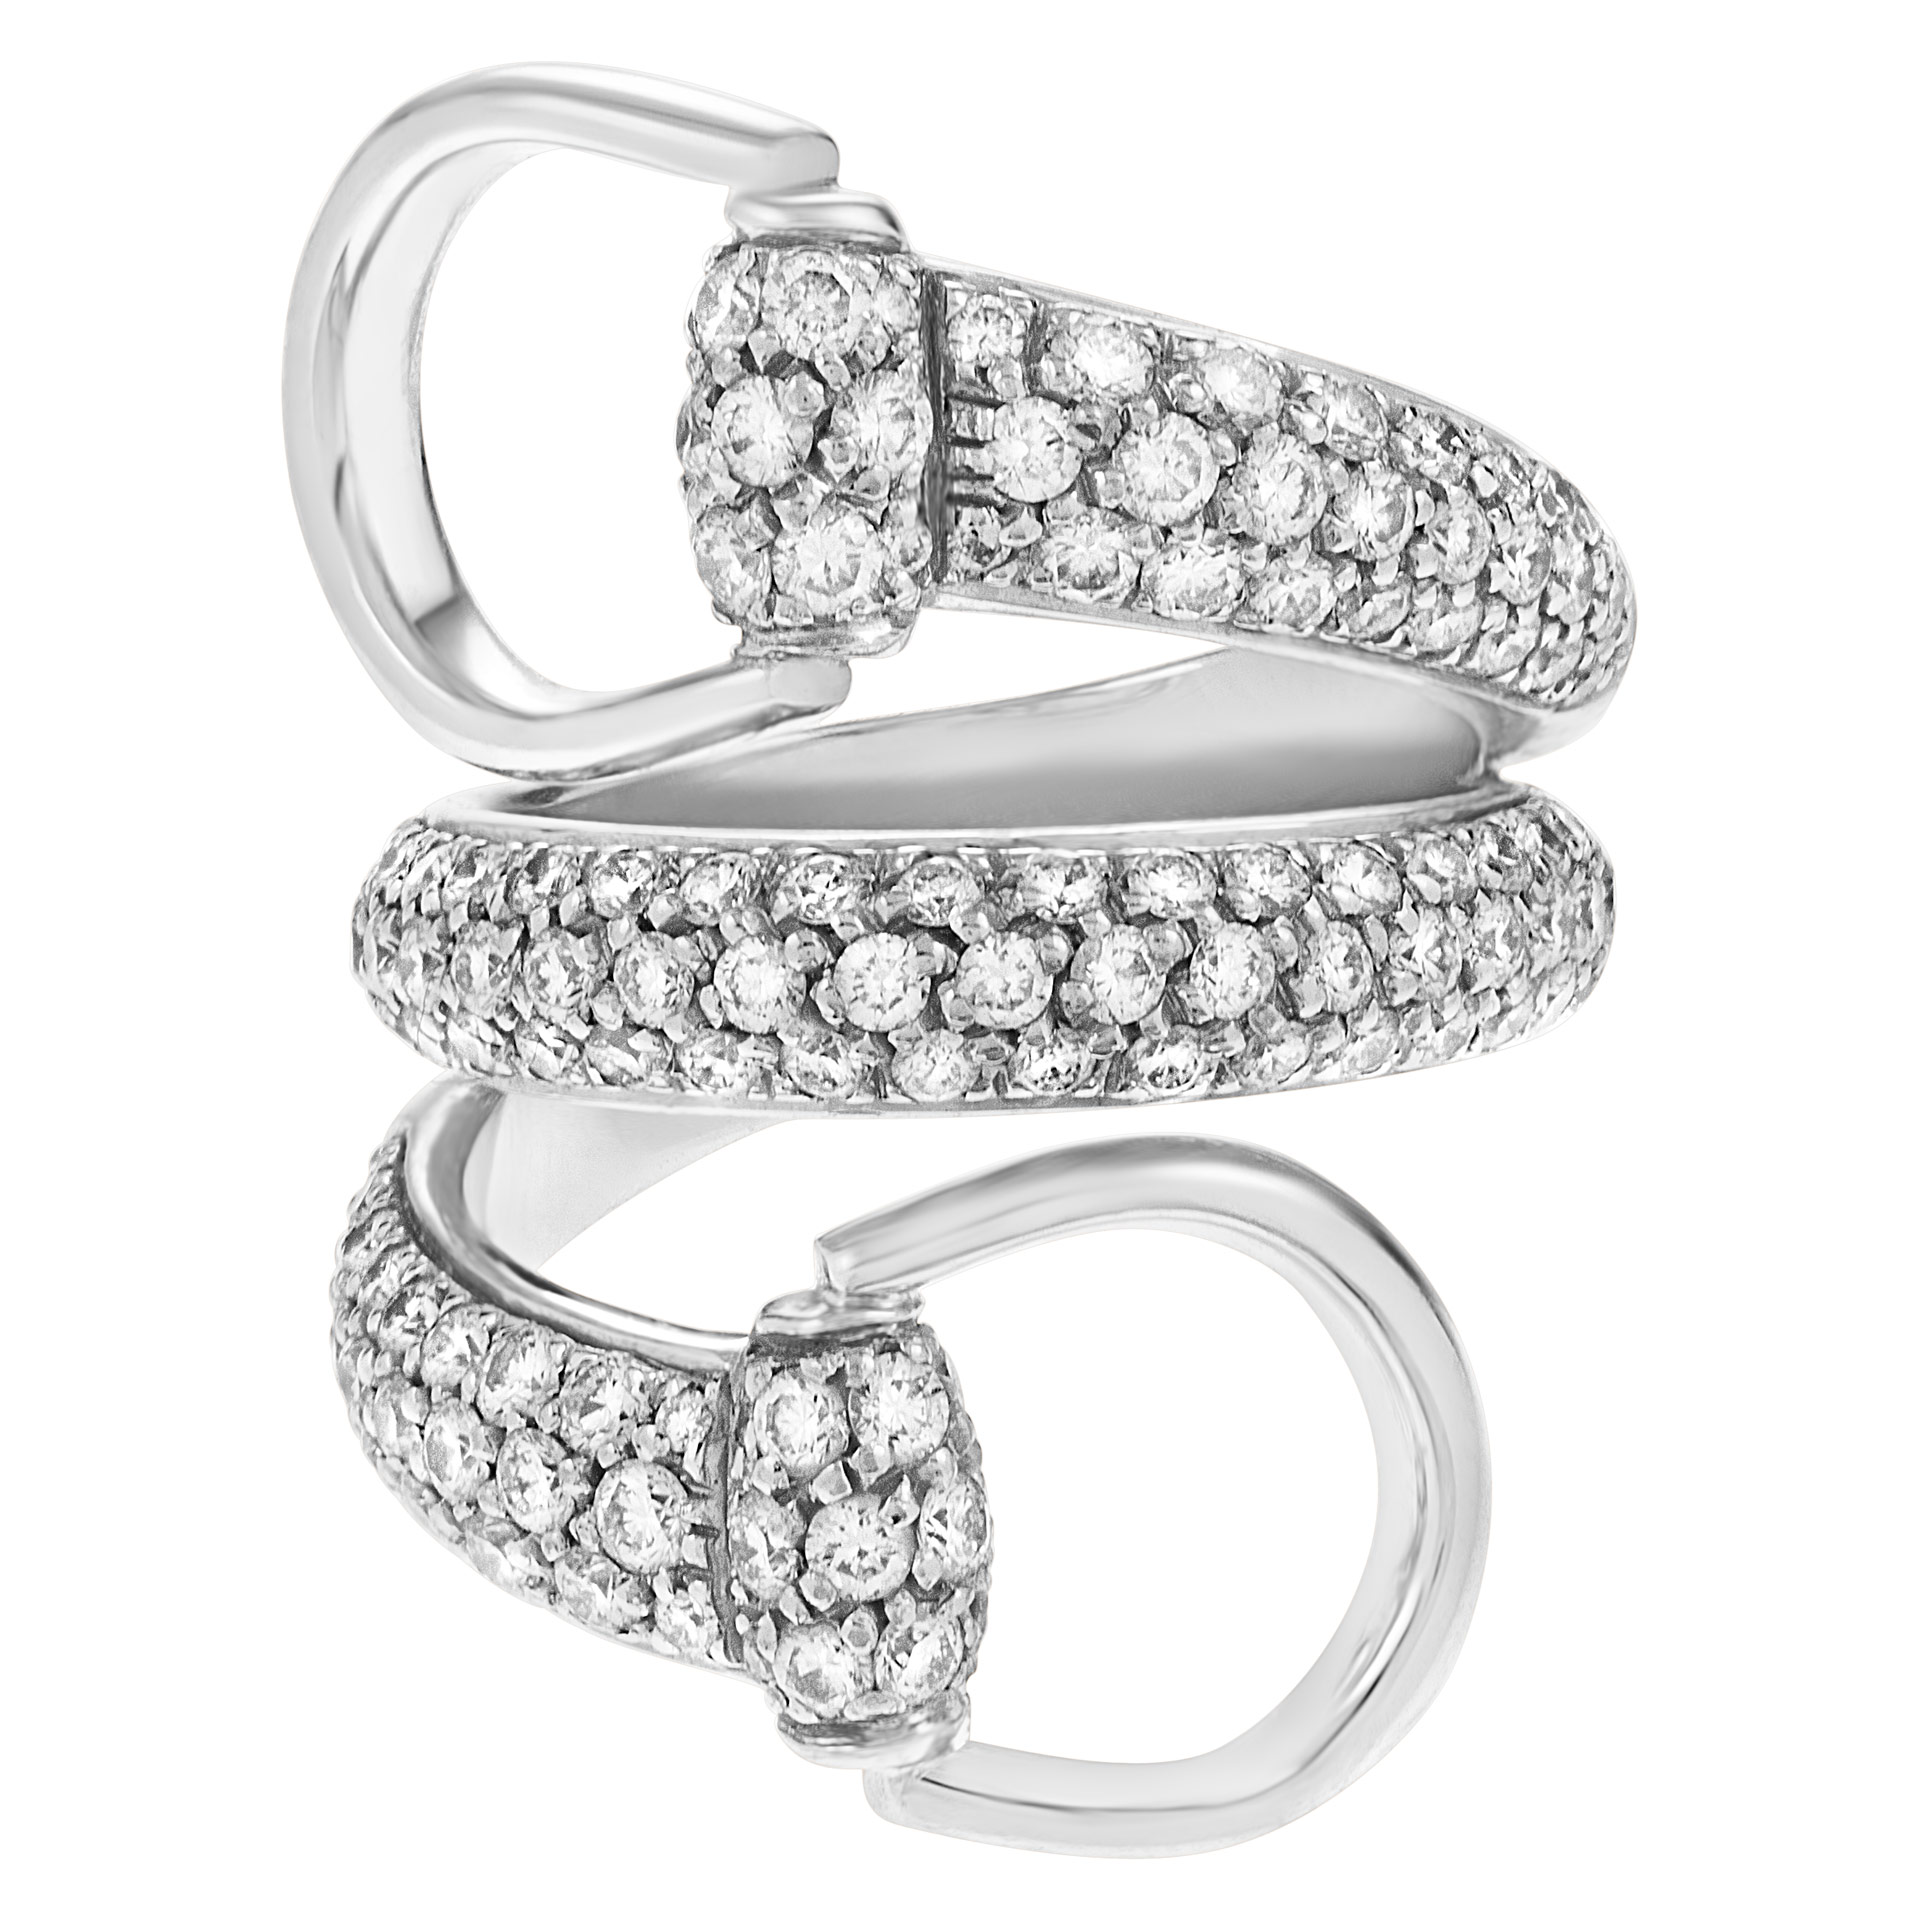 Gucci Horsebit diamond ring in 18k white gold. 1.98 carats. Size 6